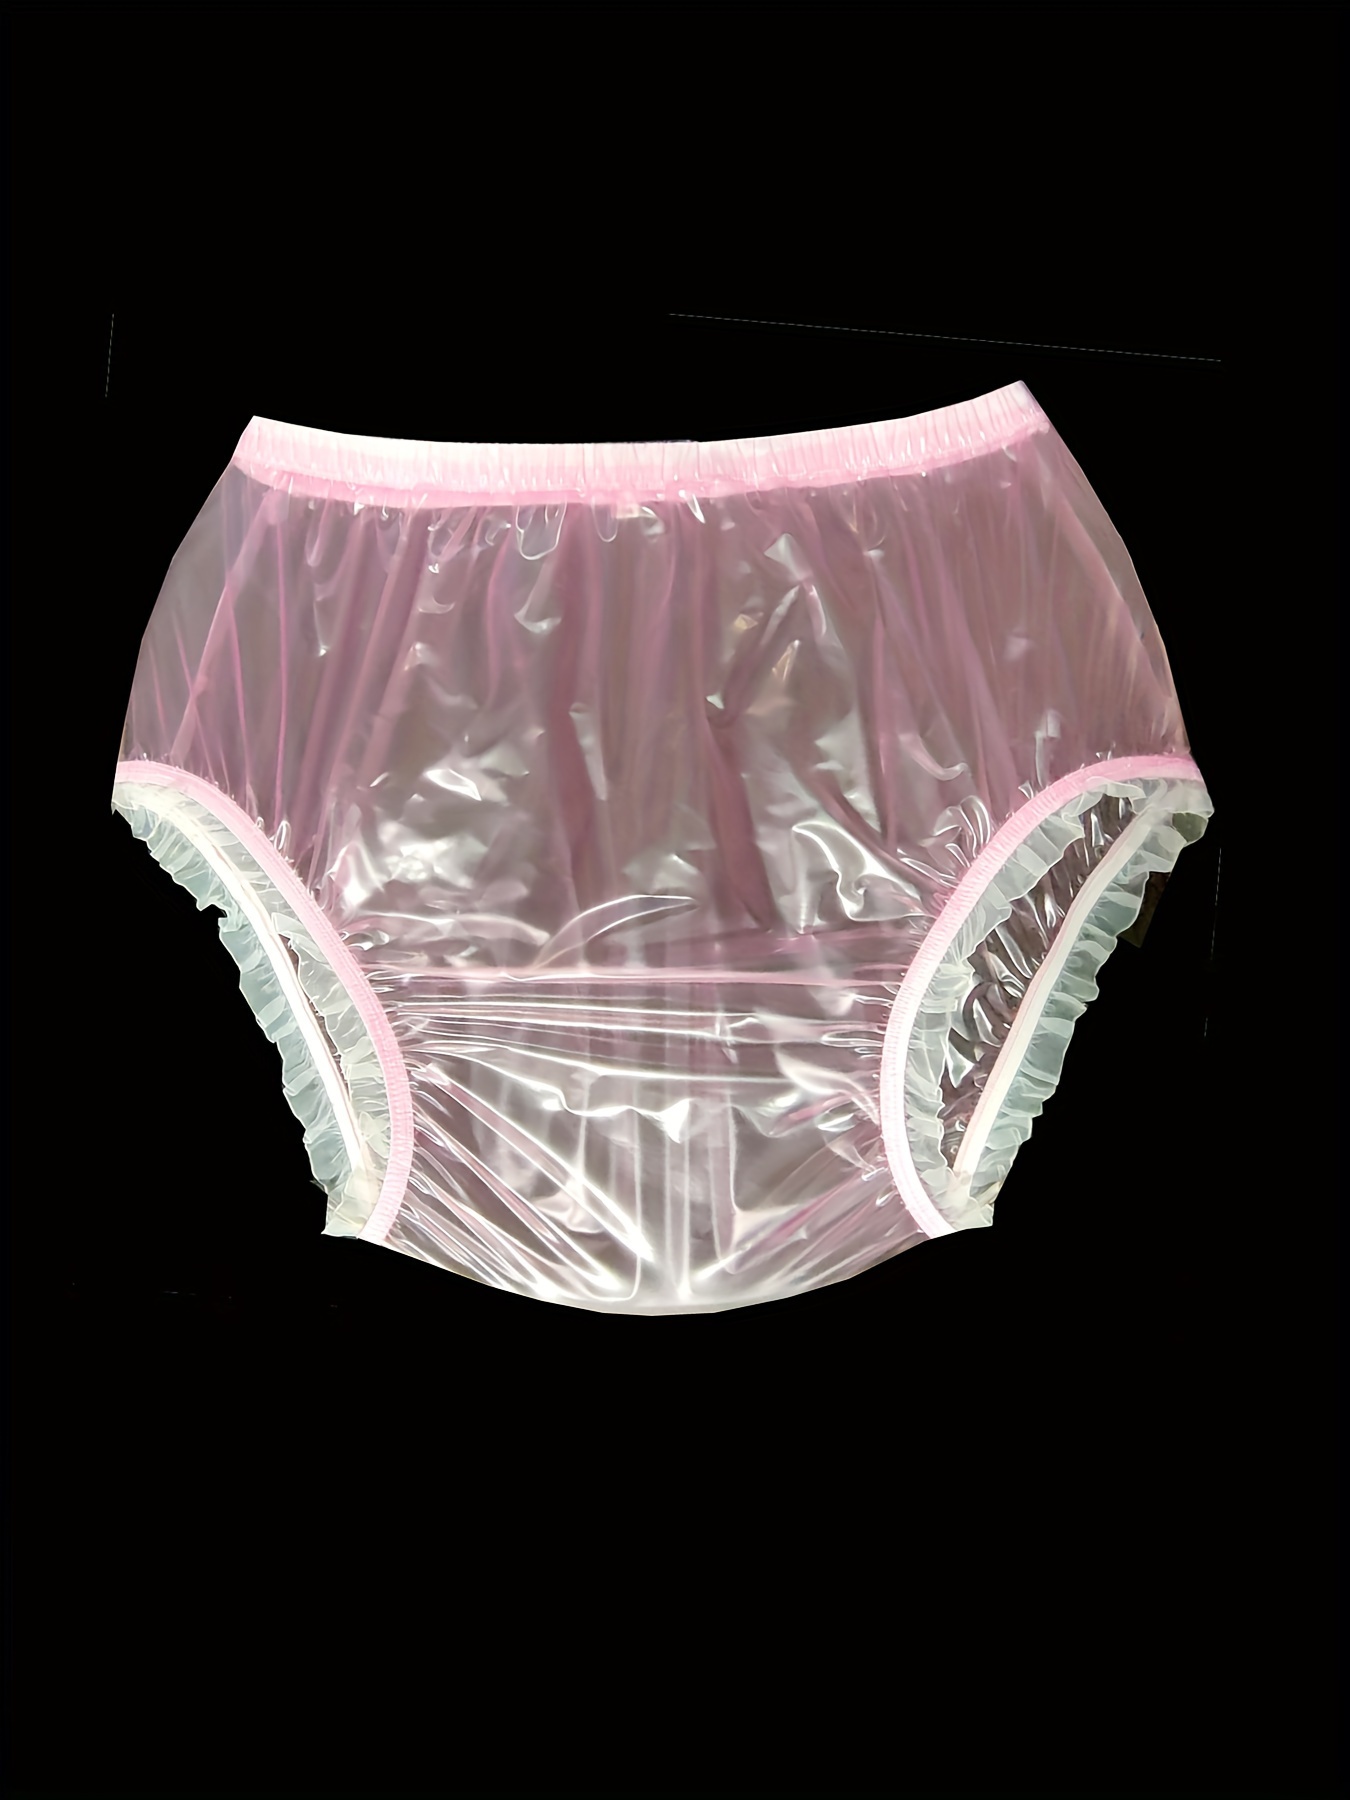  Adult Plastic Pants, Full Transparent Panties, Adult